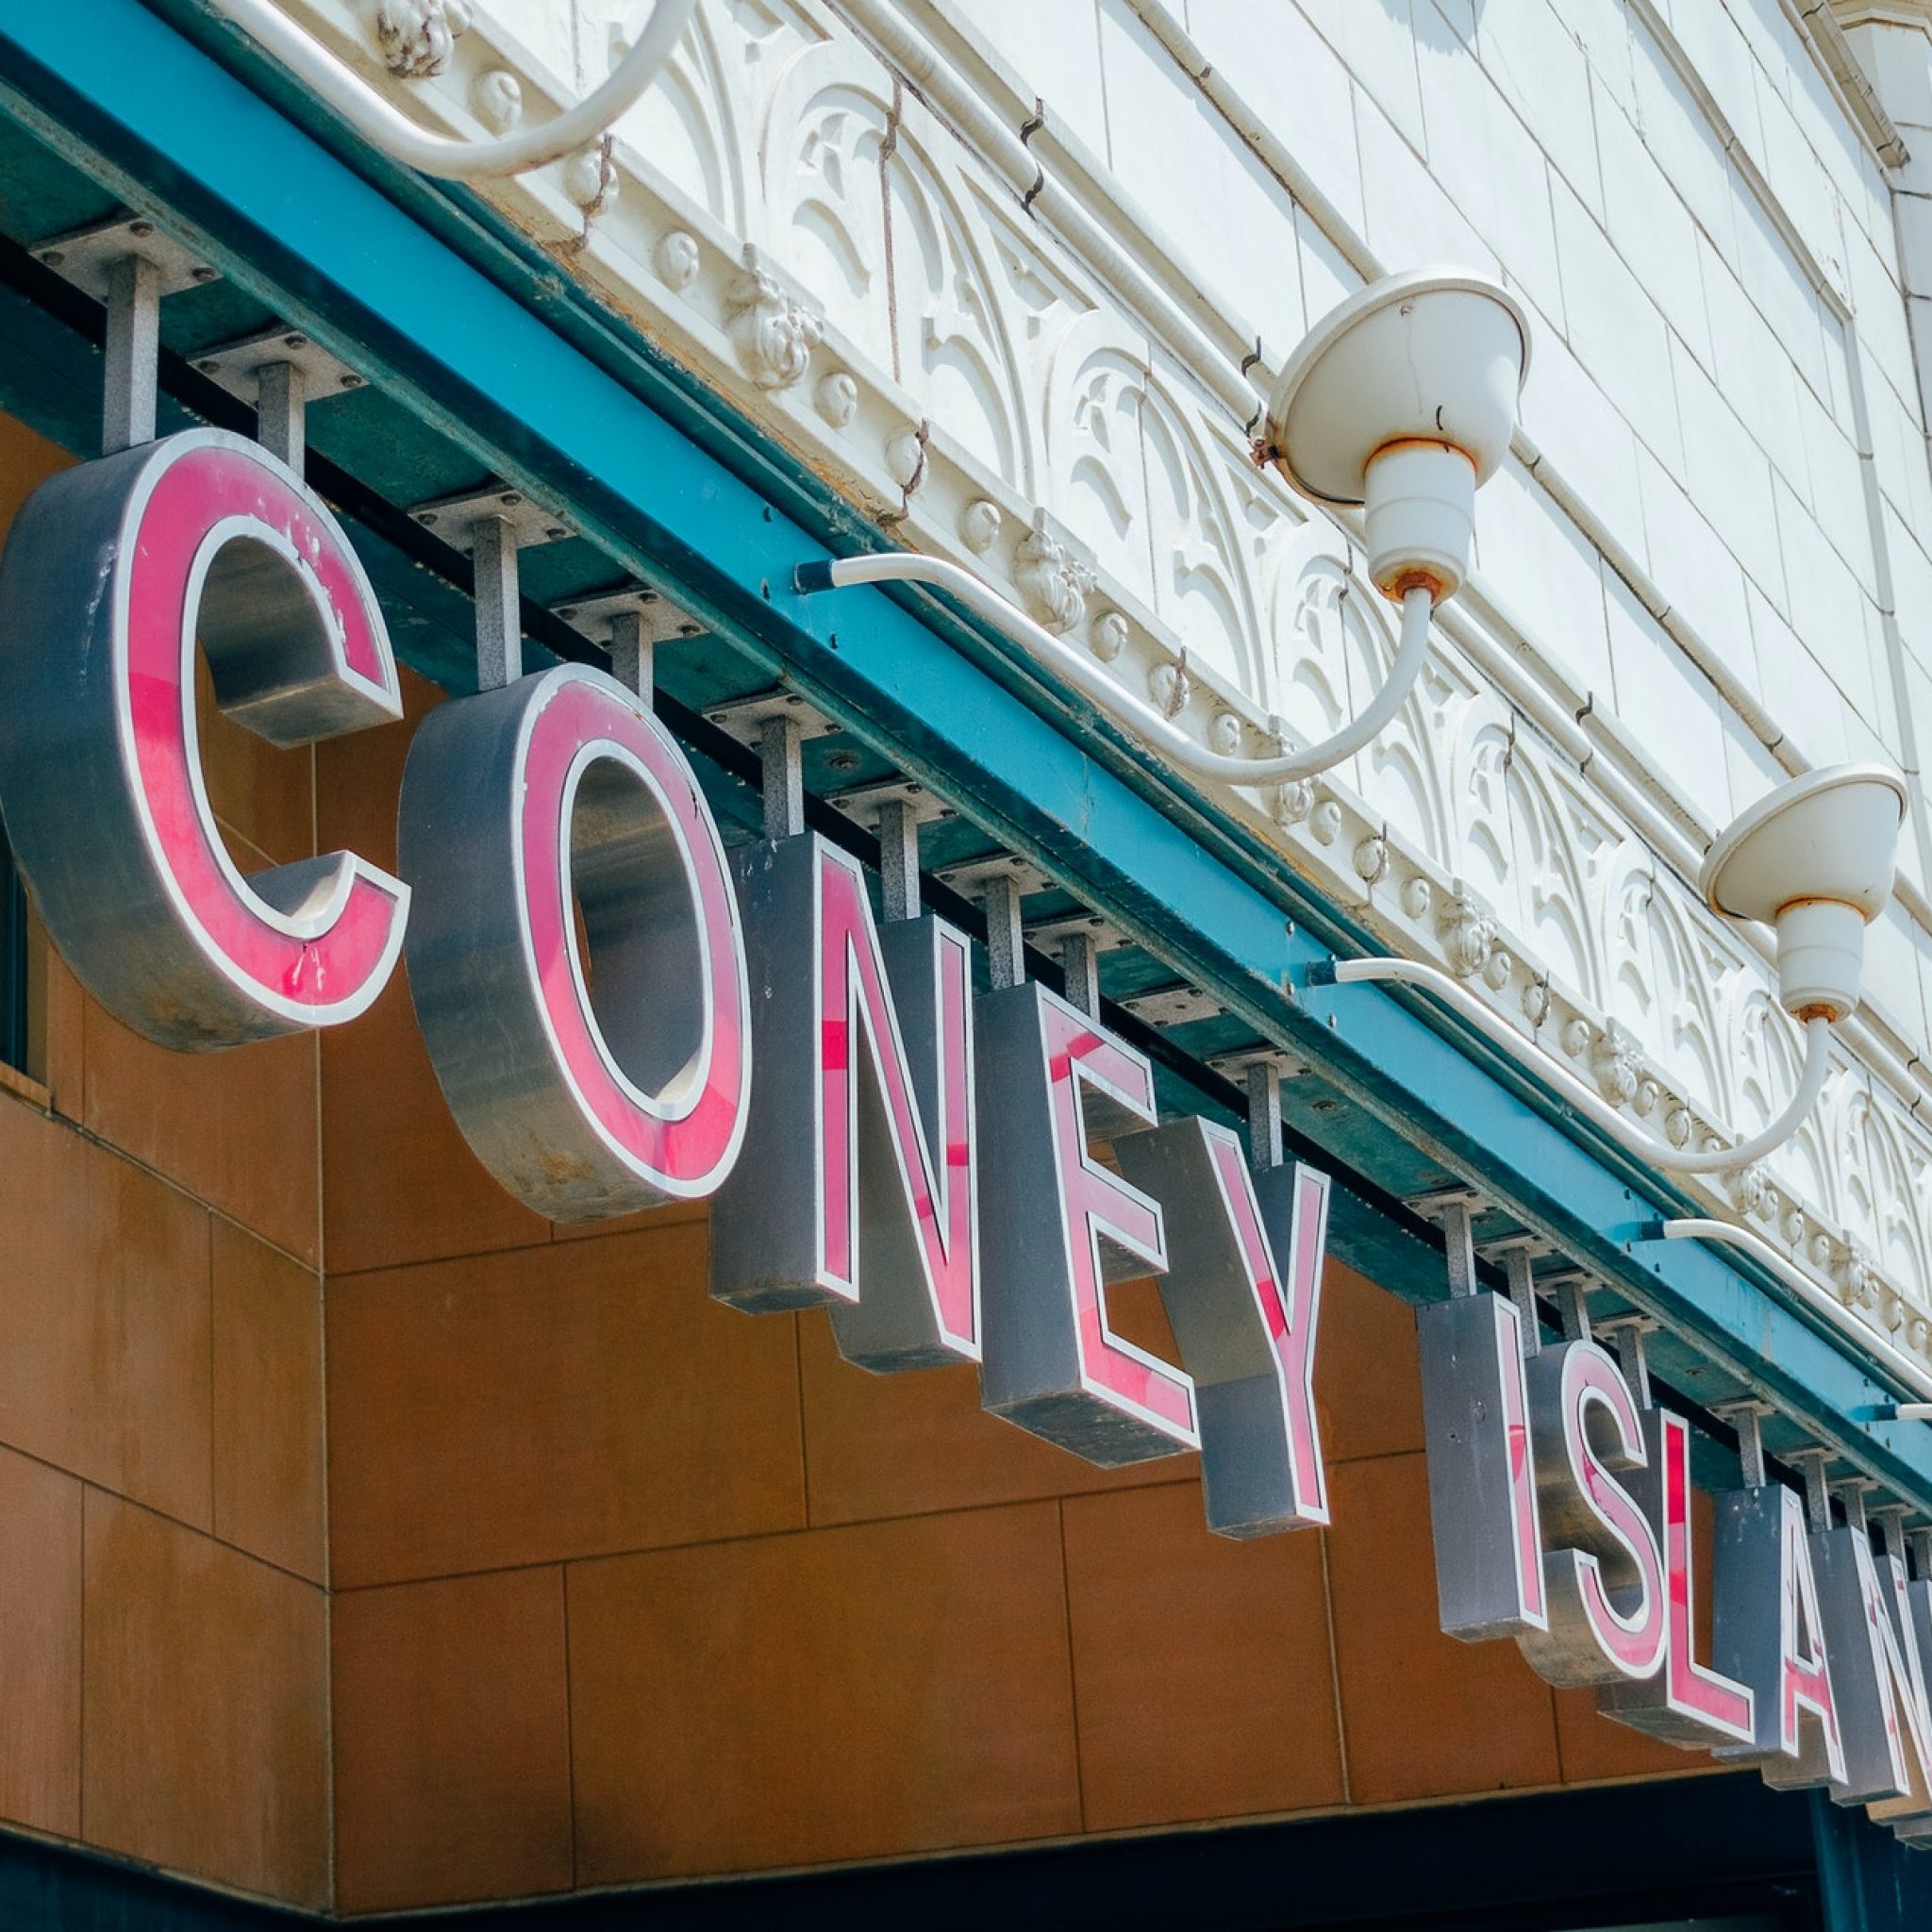 Coney Island entrance sign to subway